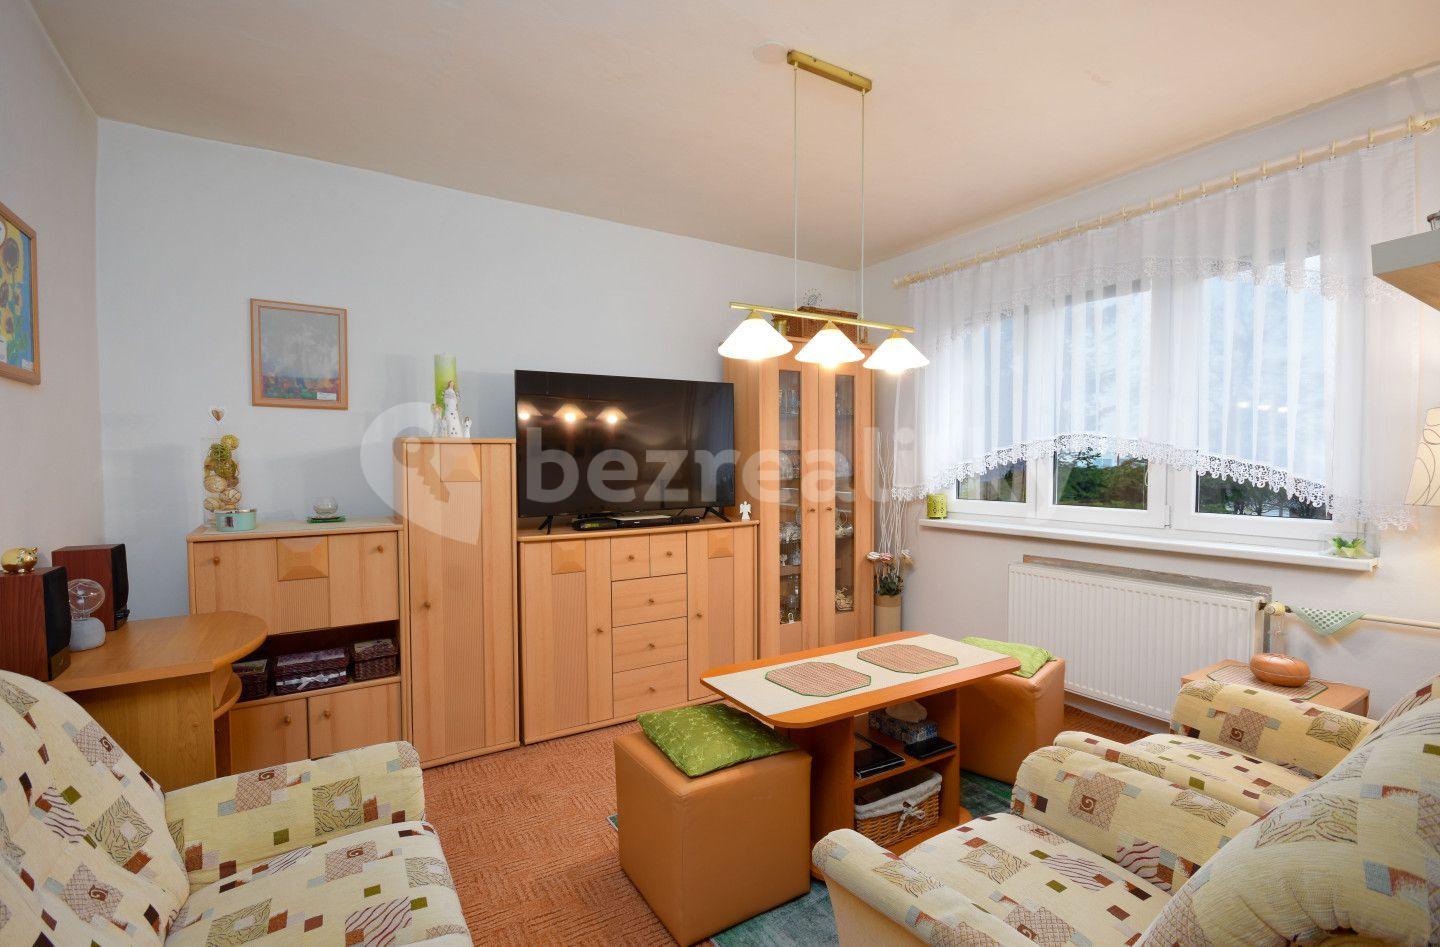 Predaj bytu 4-izbový 71 m², Na Příčnici, Vratimov, Moravskoslezský kraj